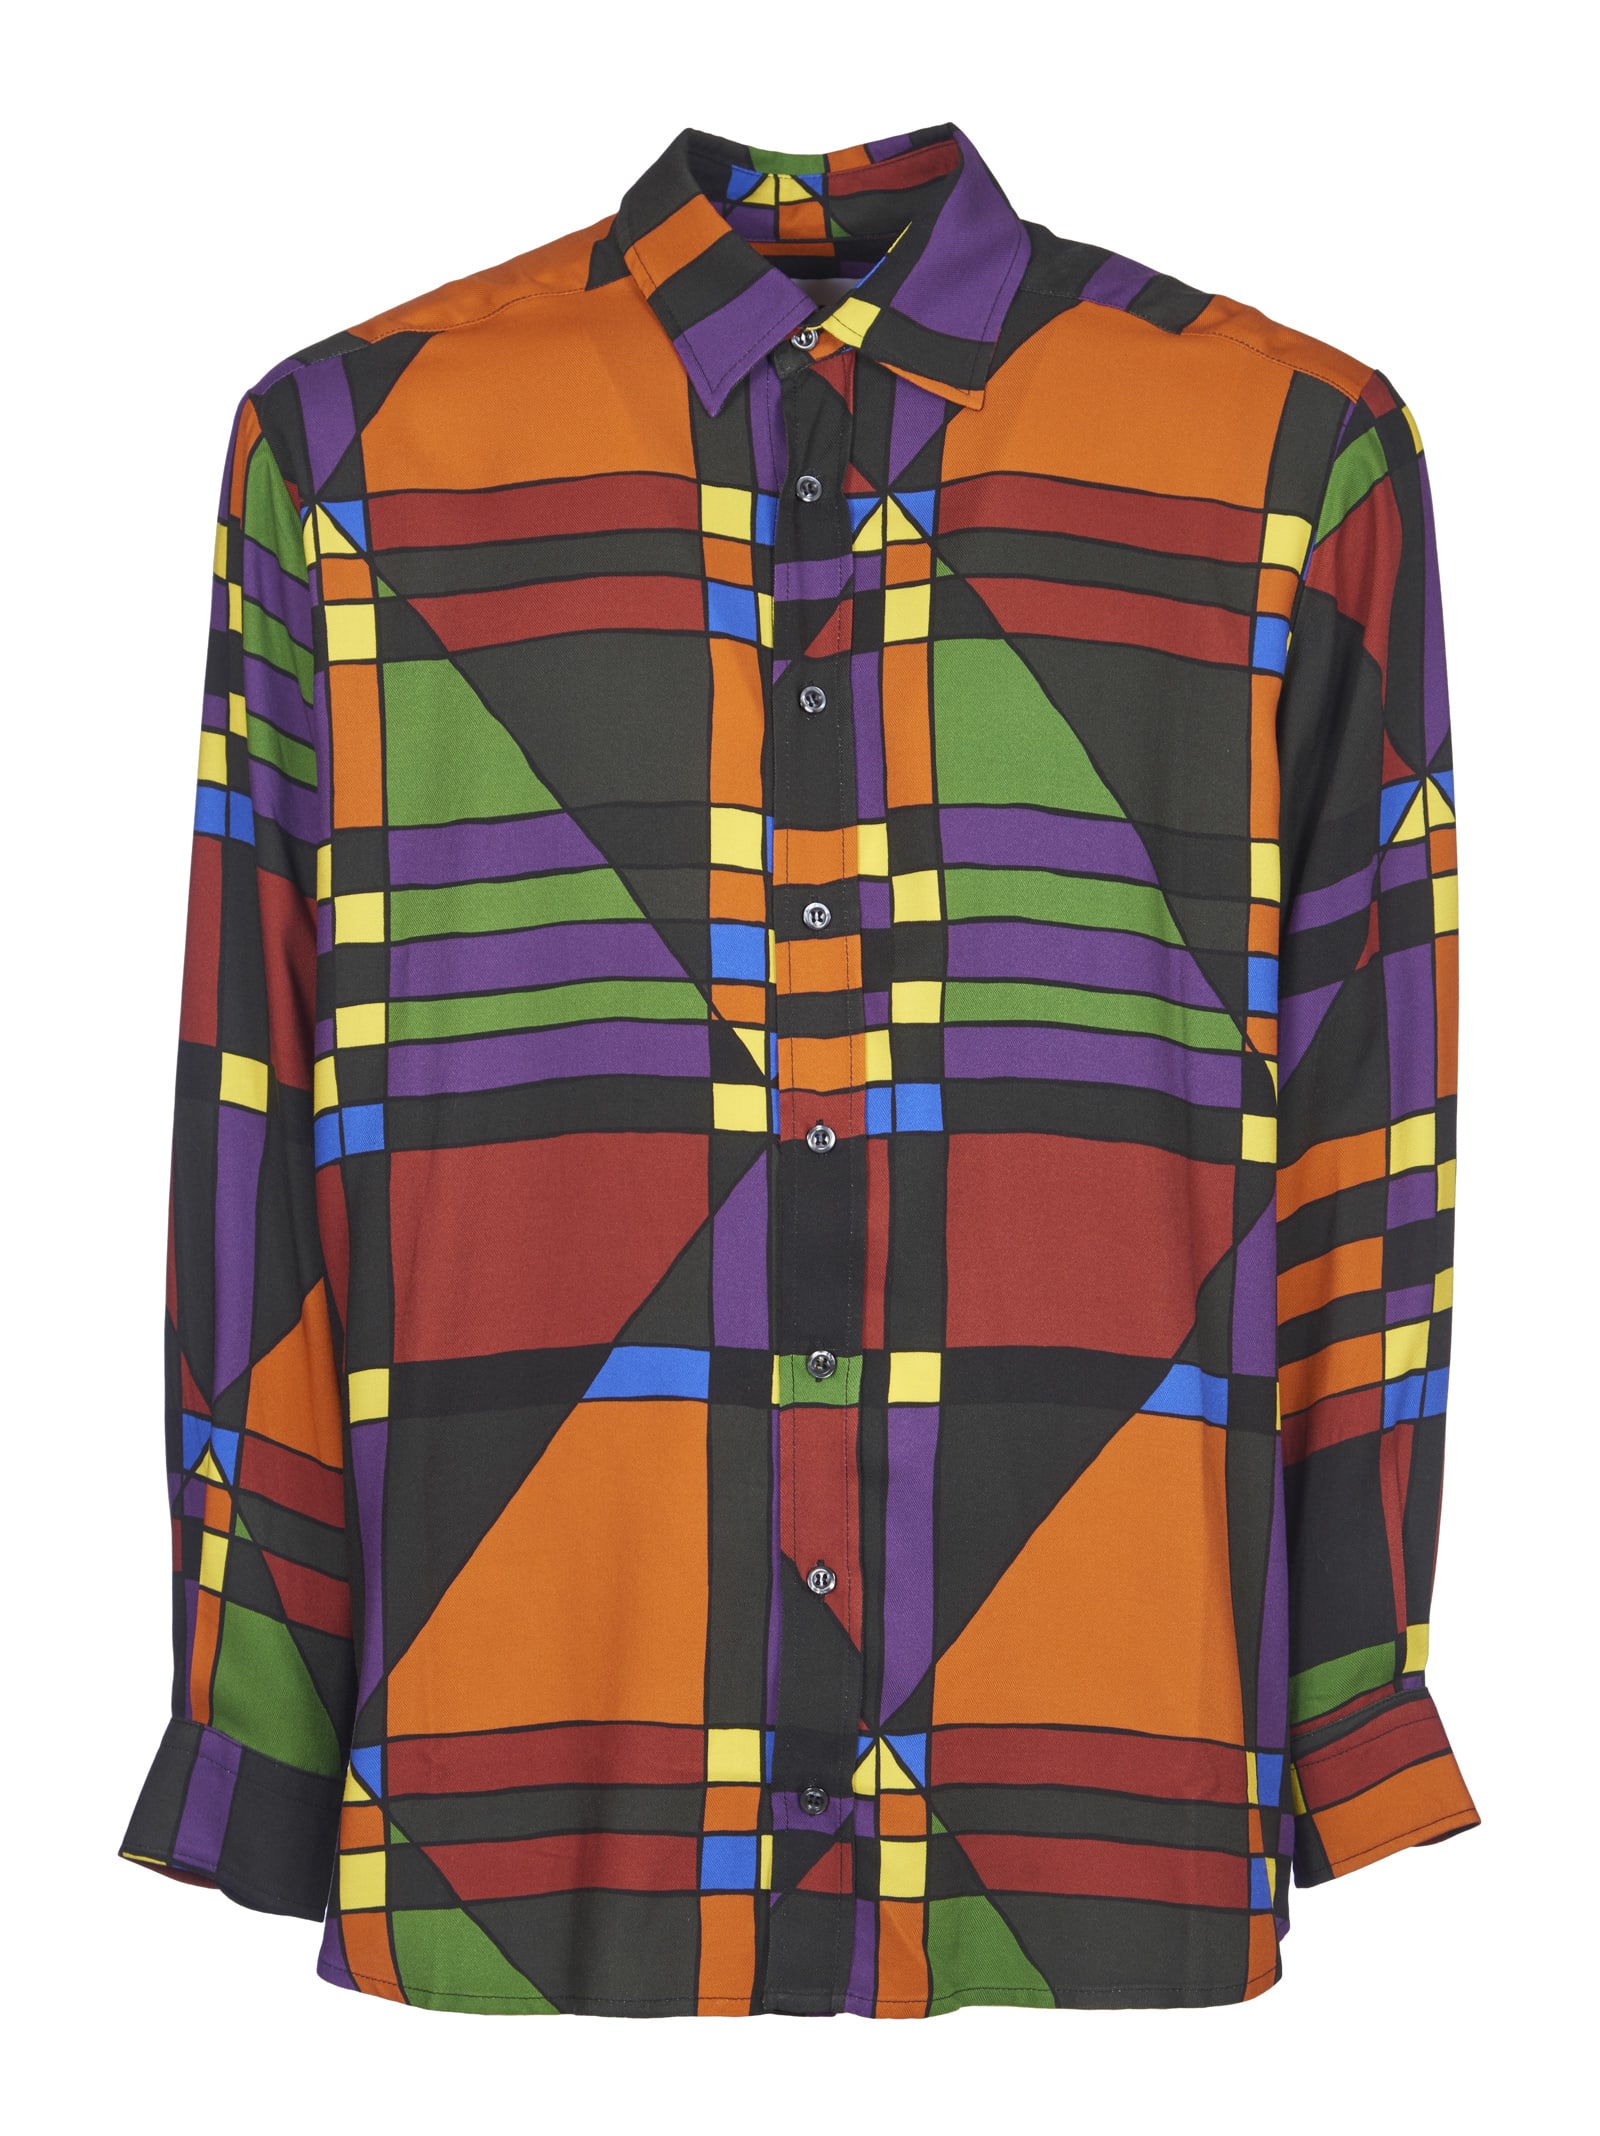 Waxman Brothers Geometric Pattern Over Shirt